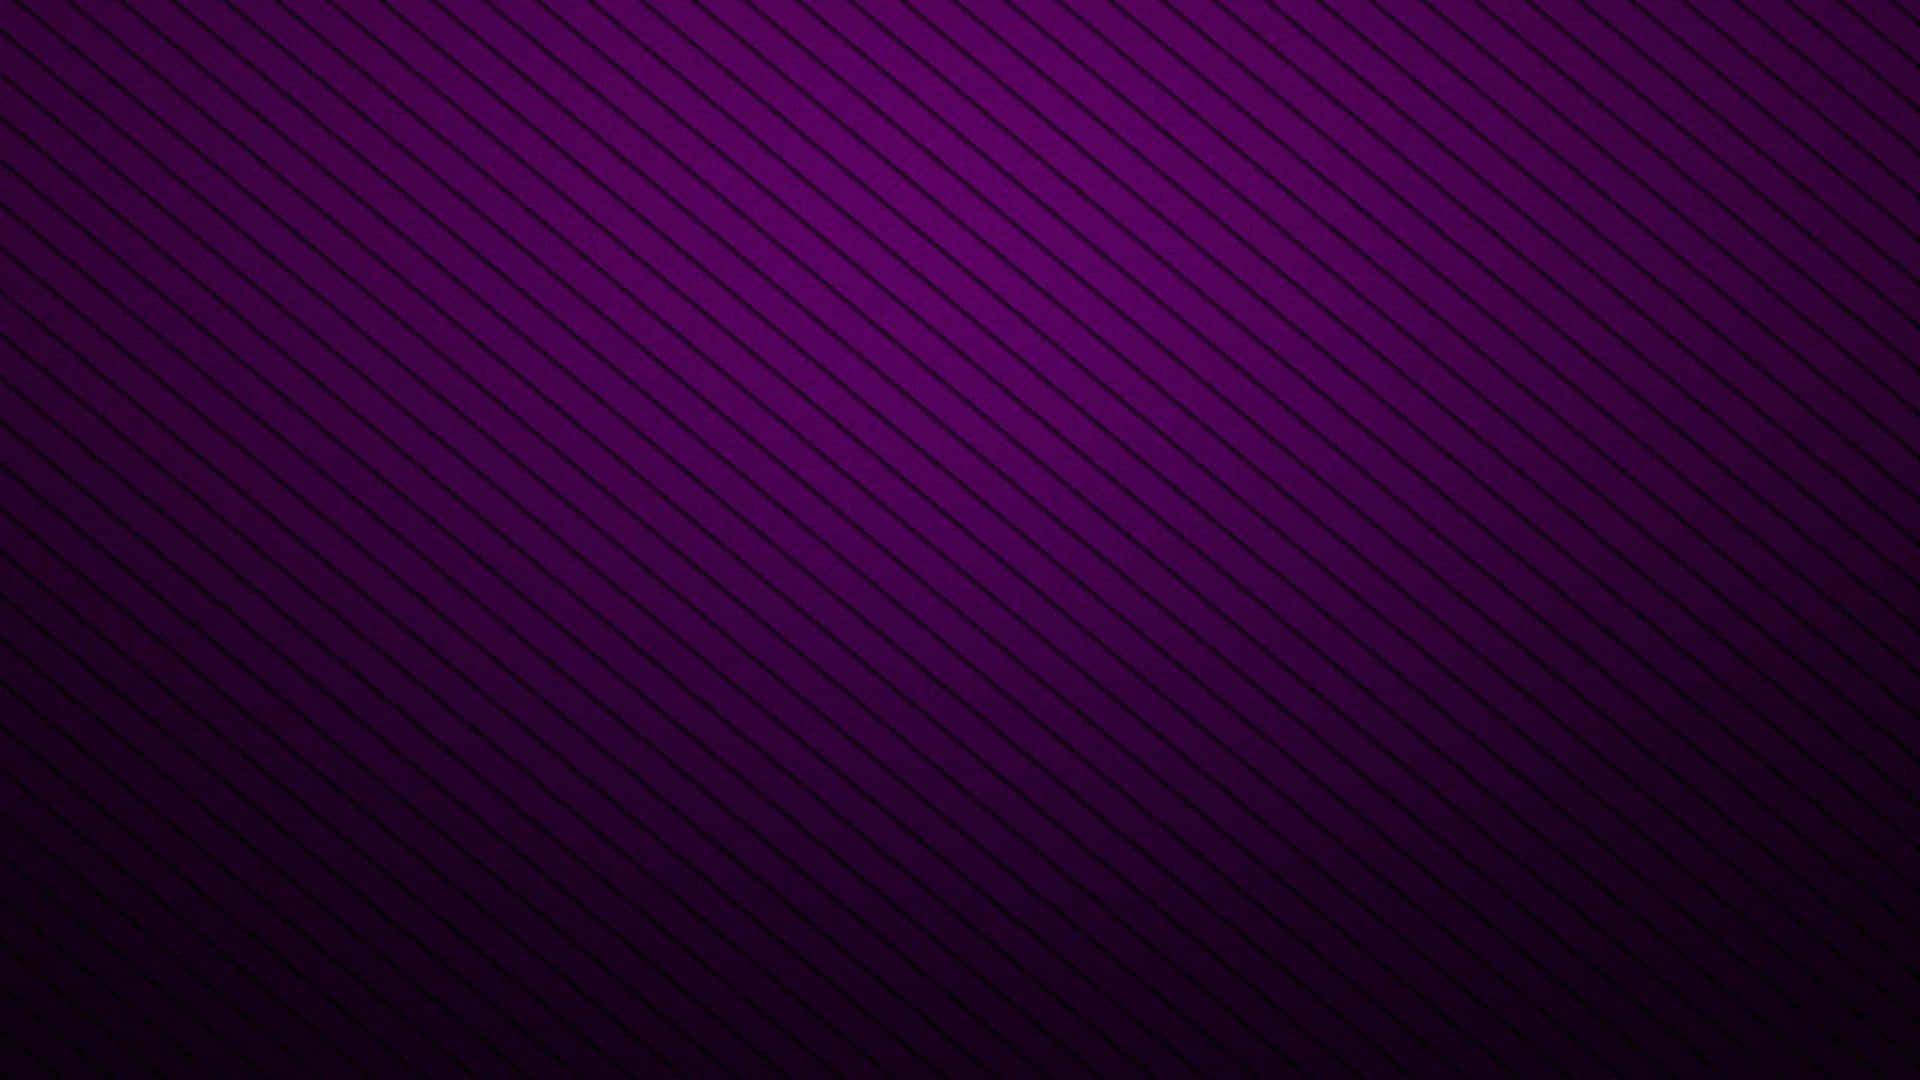 purple texture